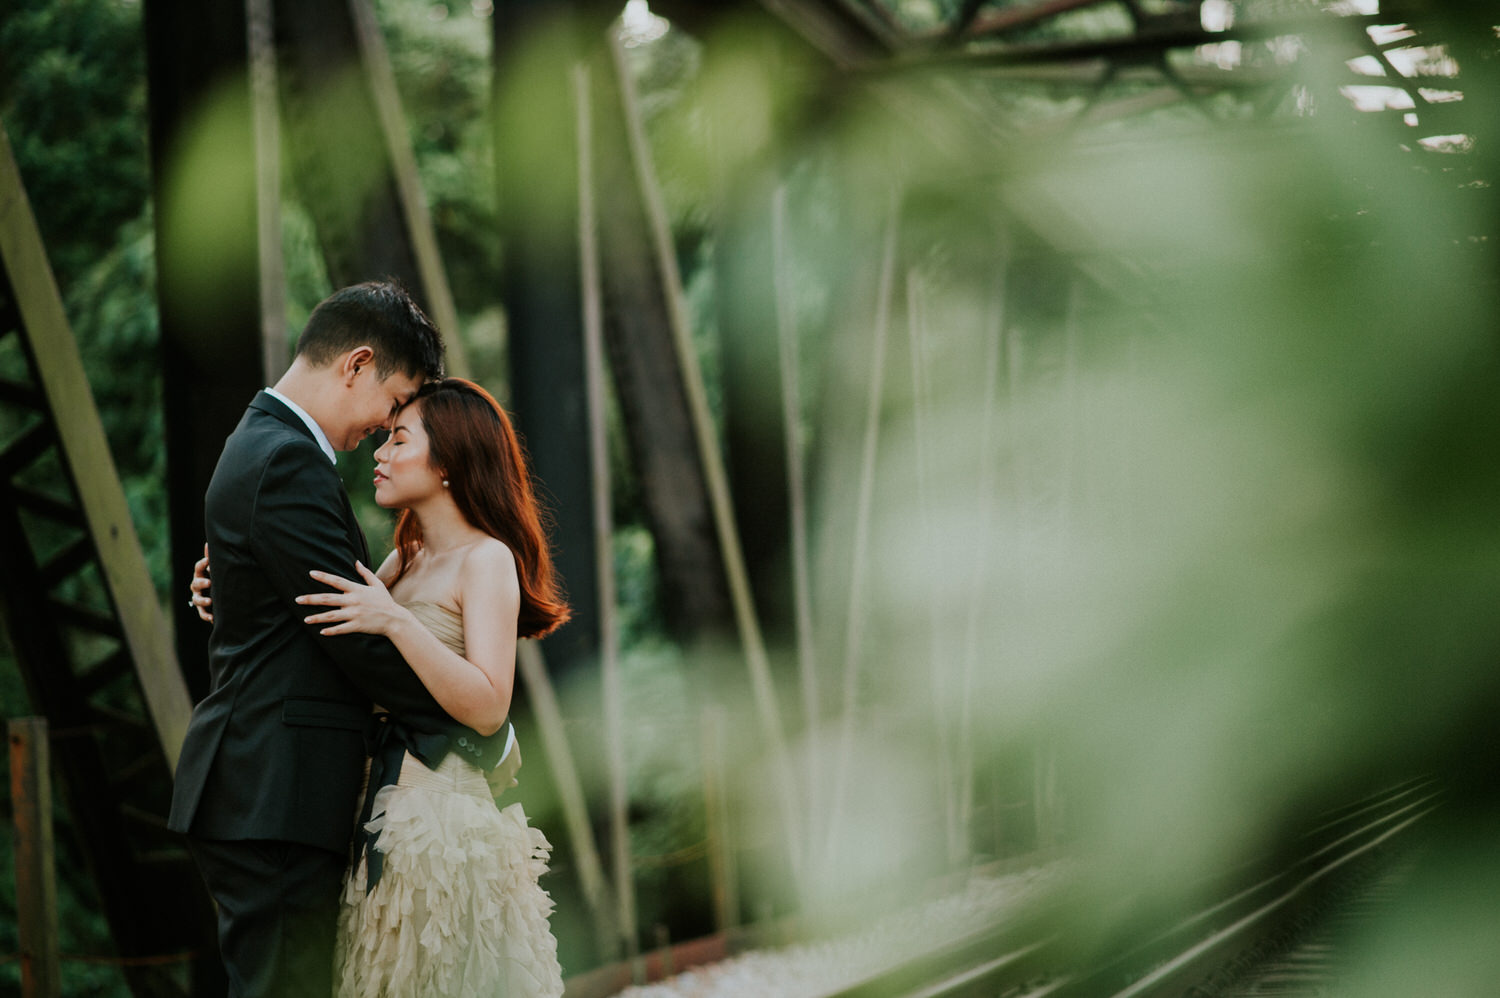 singapore prewedding destination - singapore wedding - diktatphotography - kadek artayasa - nikole + ardika - 44